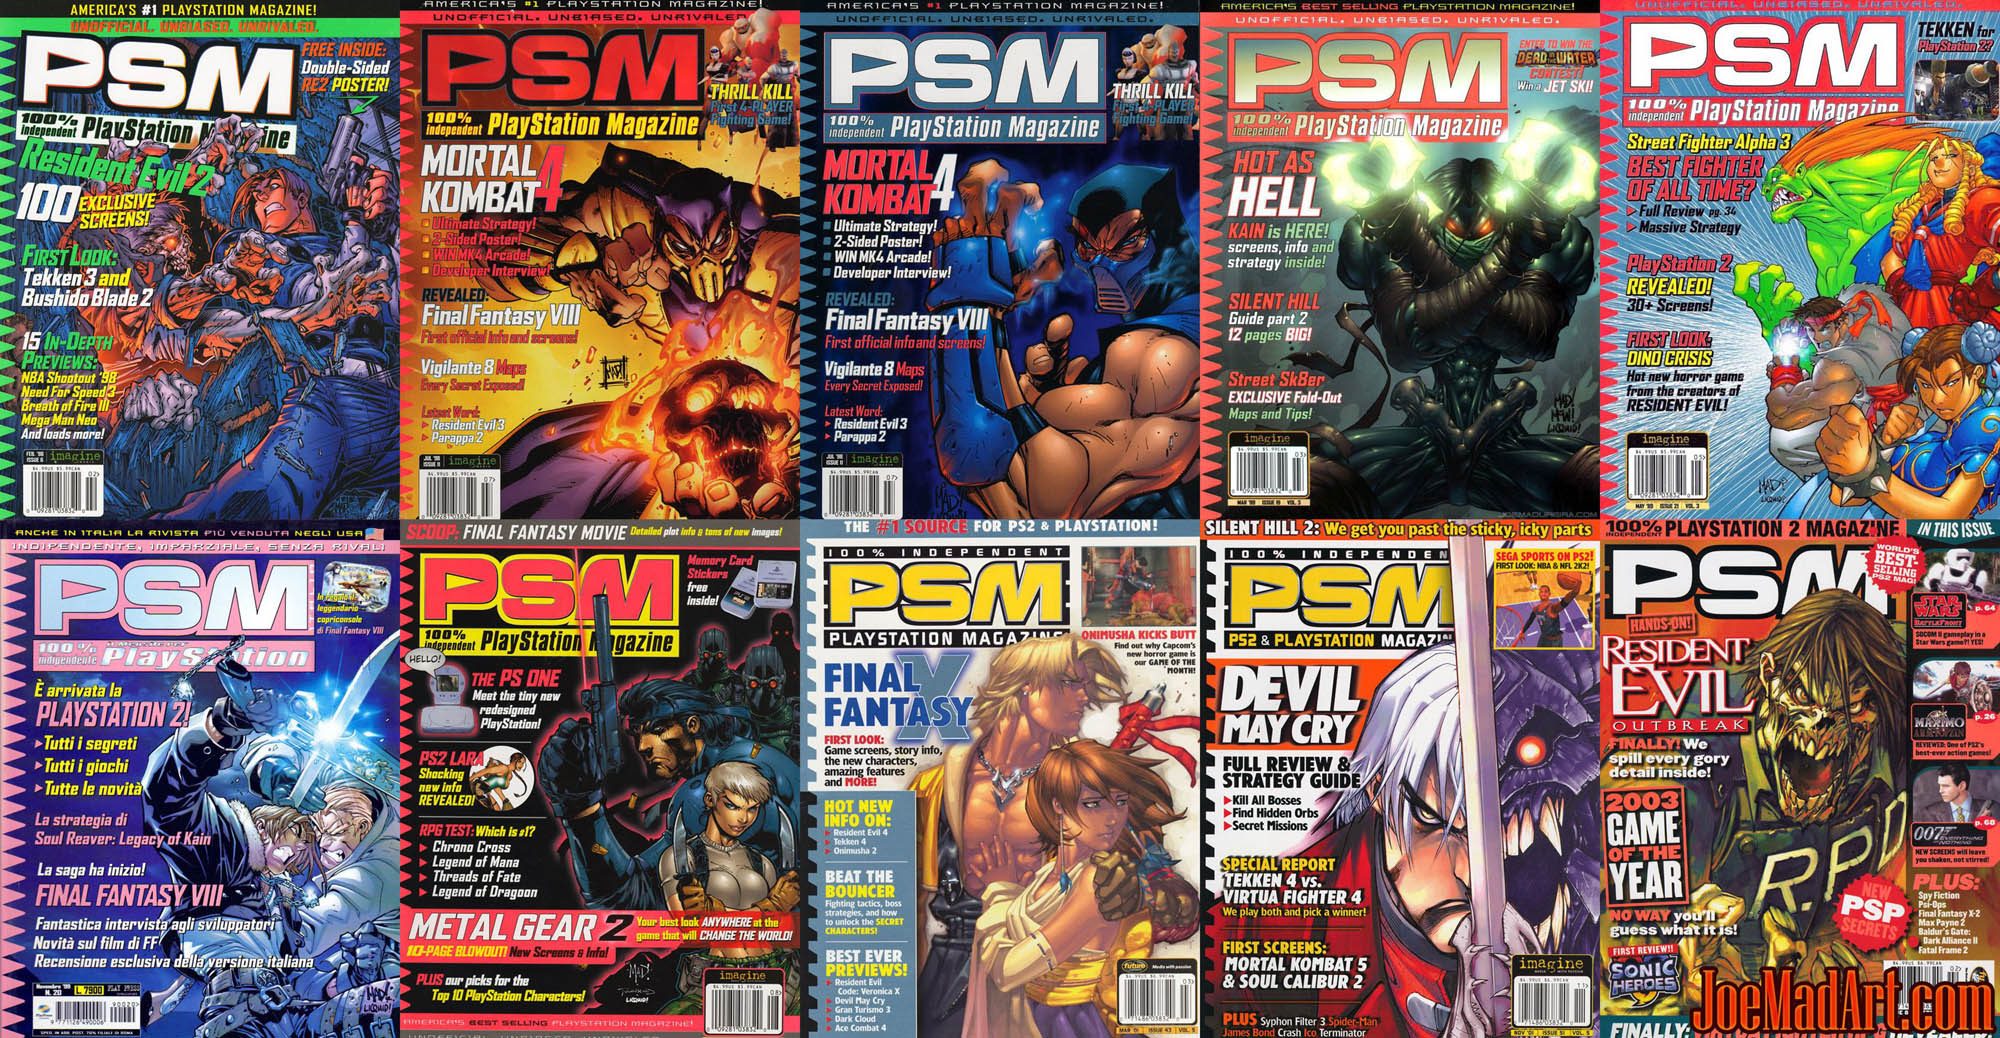 ALL-PSM-PlayStation-magazine-covers-by-joe-madureira-m.jpg